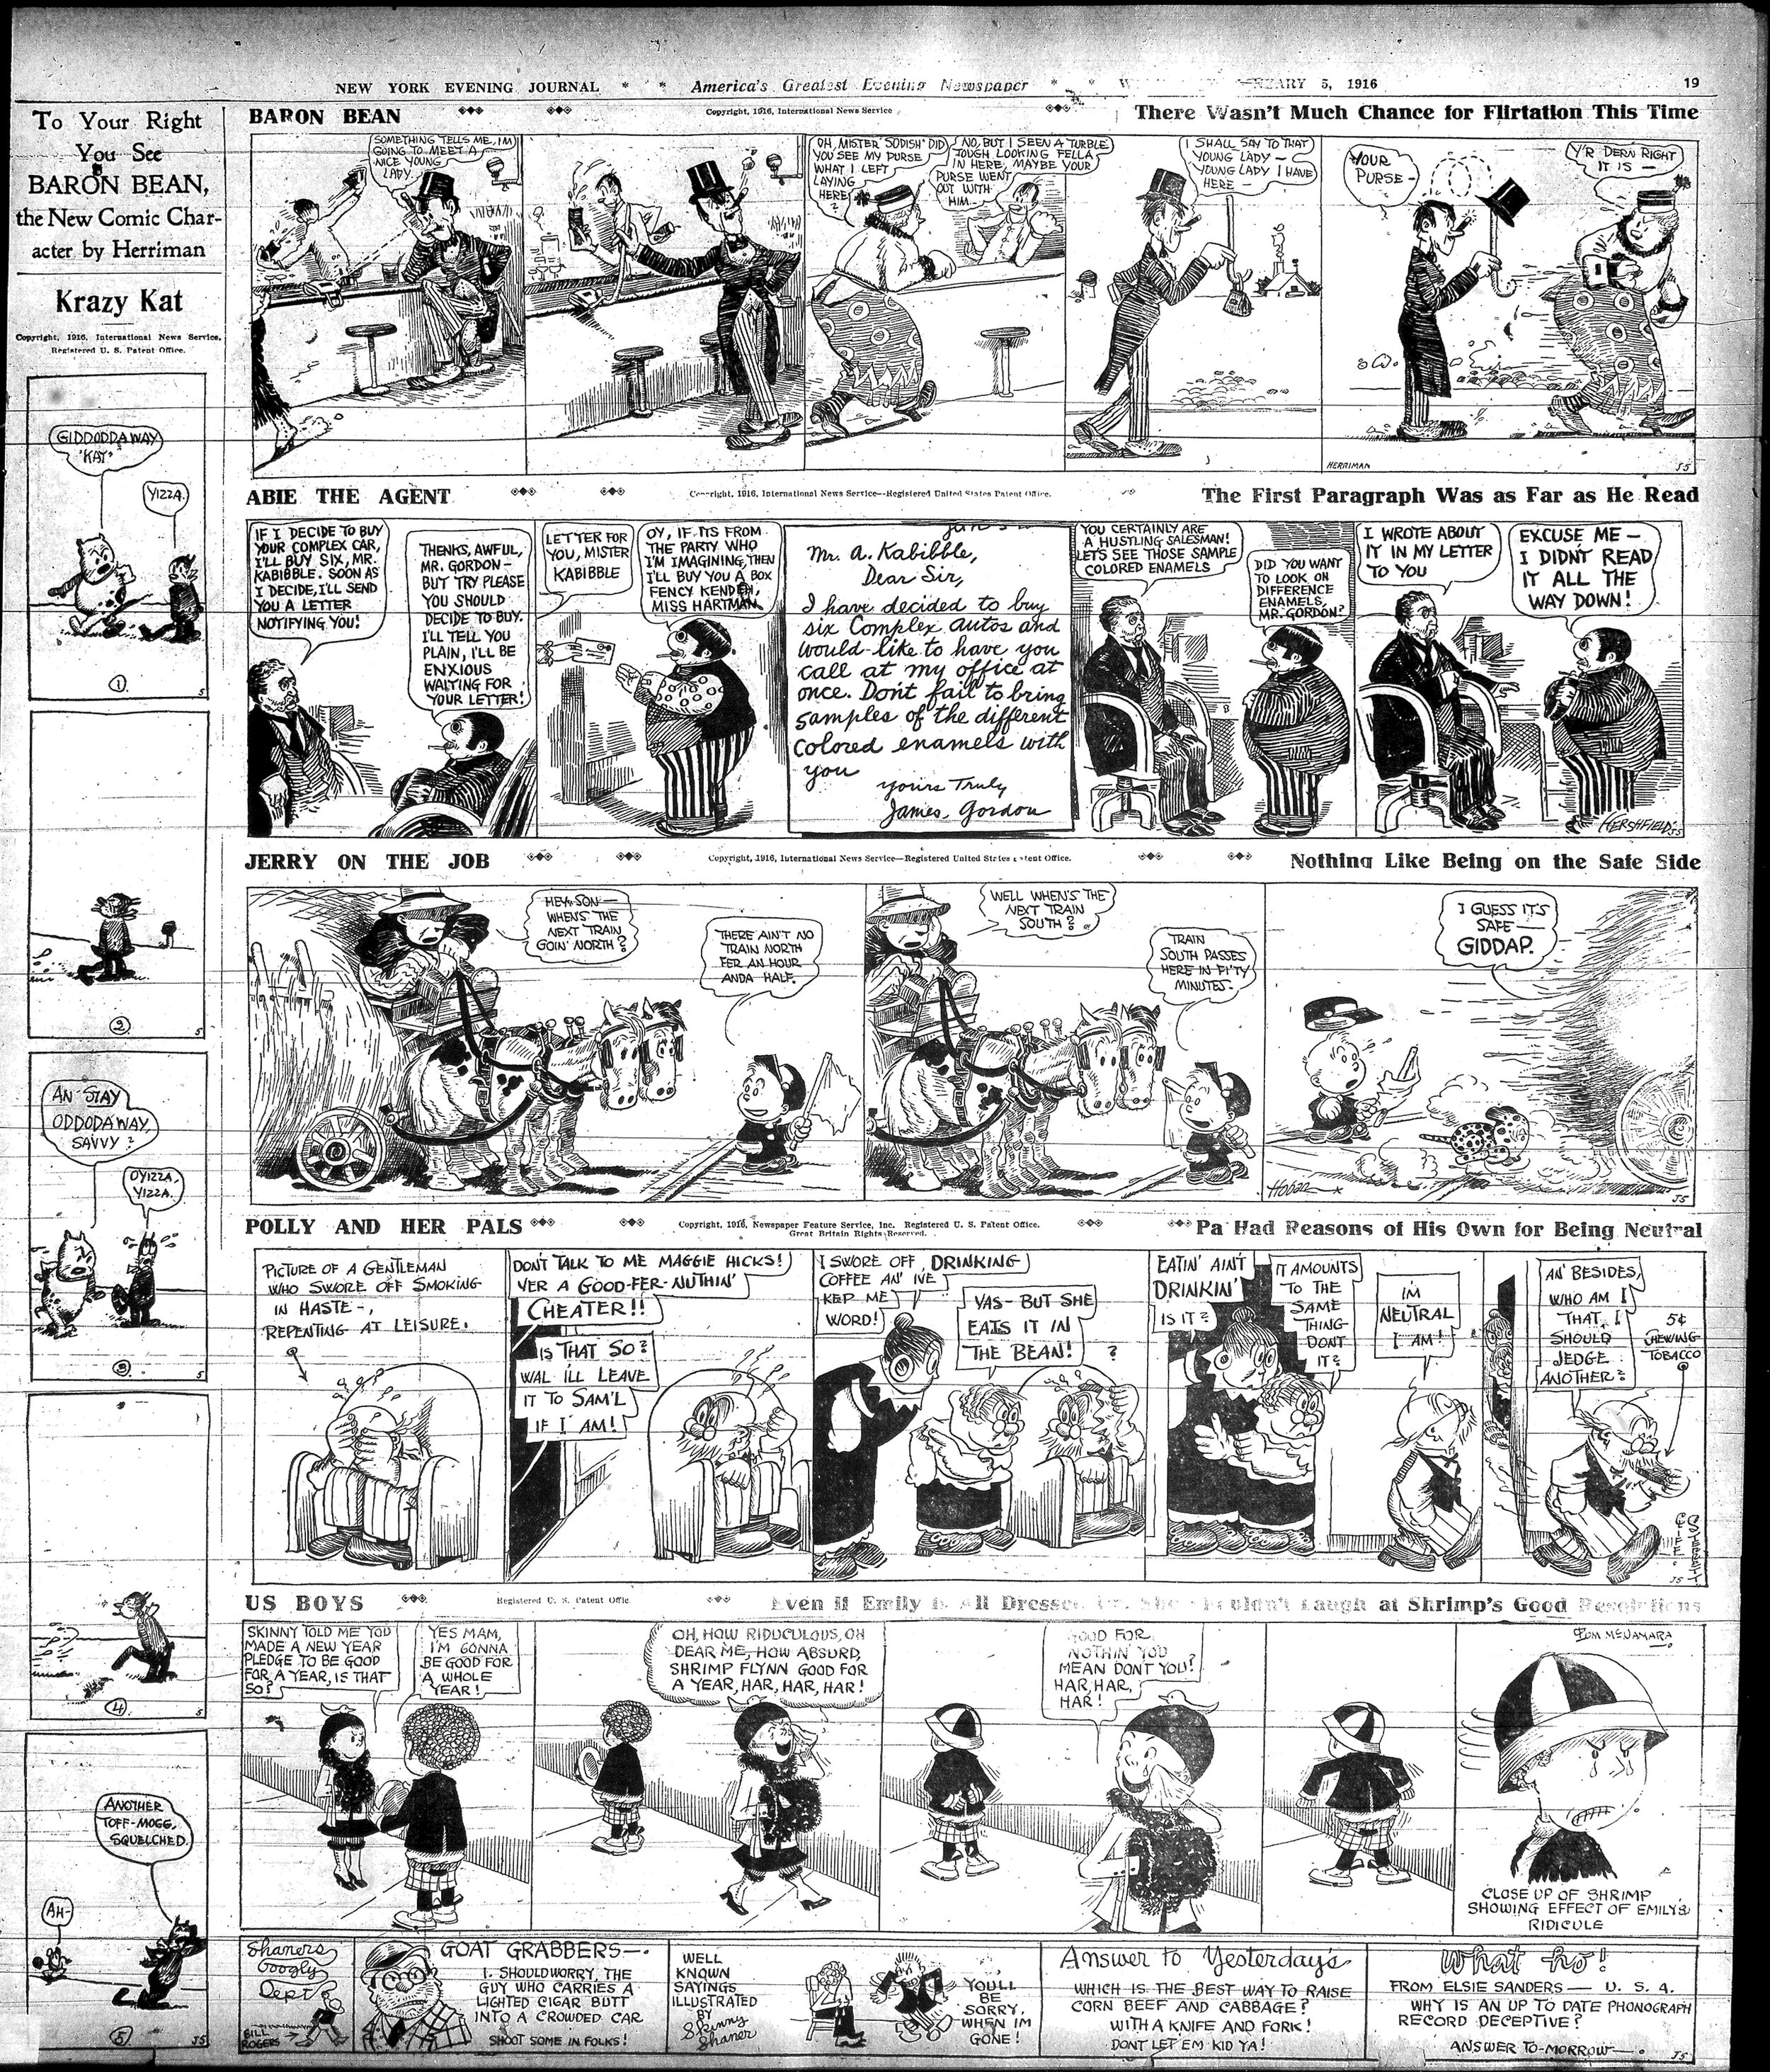 14-1916-01-05-nyej-comics-page-with-first-baron-bean-.jpg